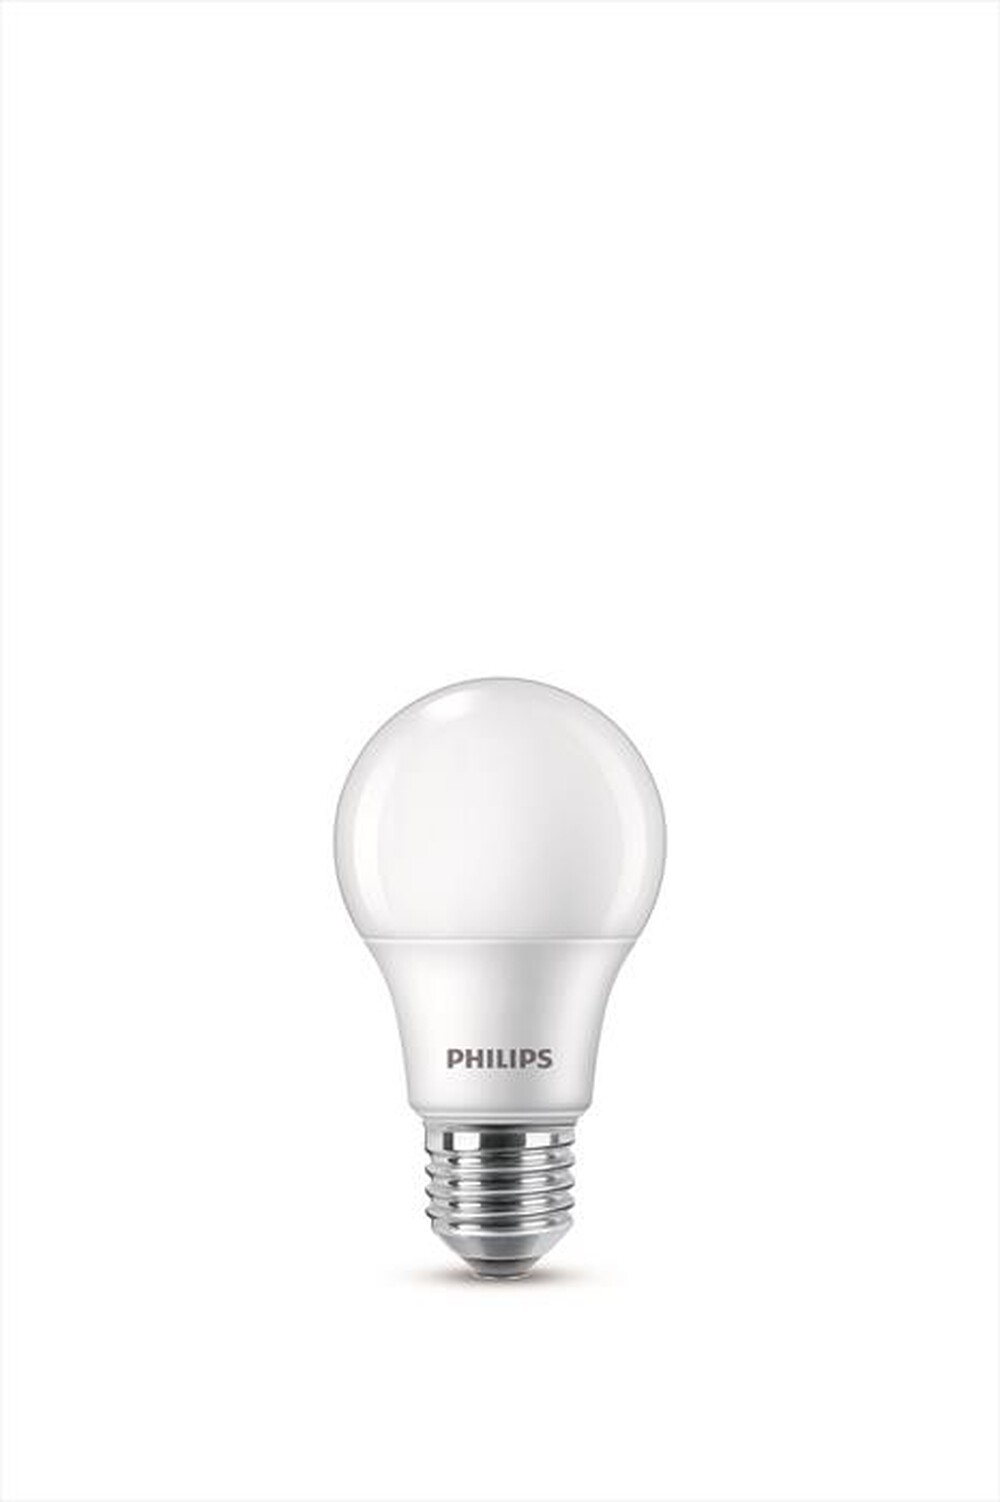 "PHILIPS - DIS LED GOCCIA 60W E27 2700K NON DIM BOX4 - White"